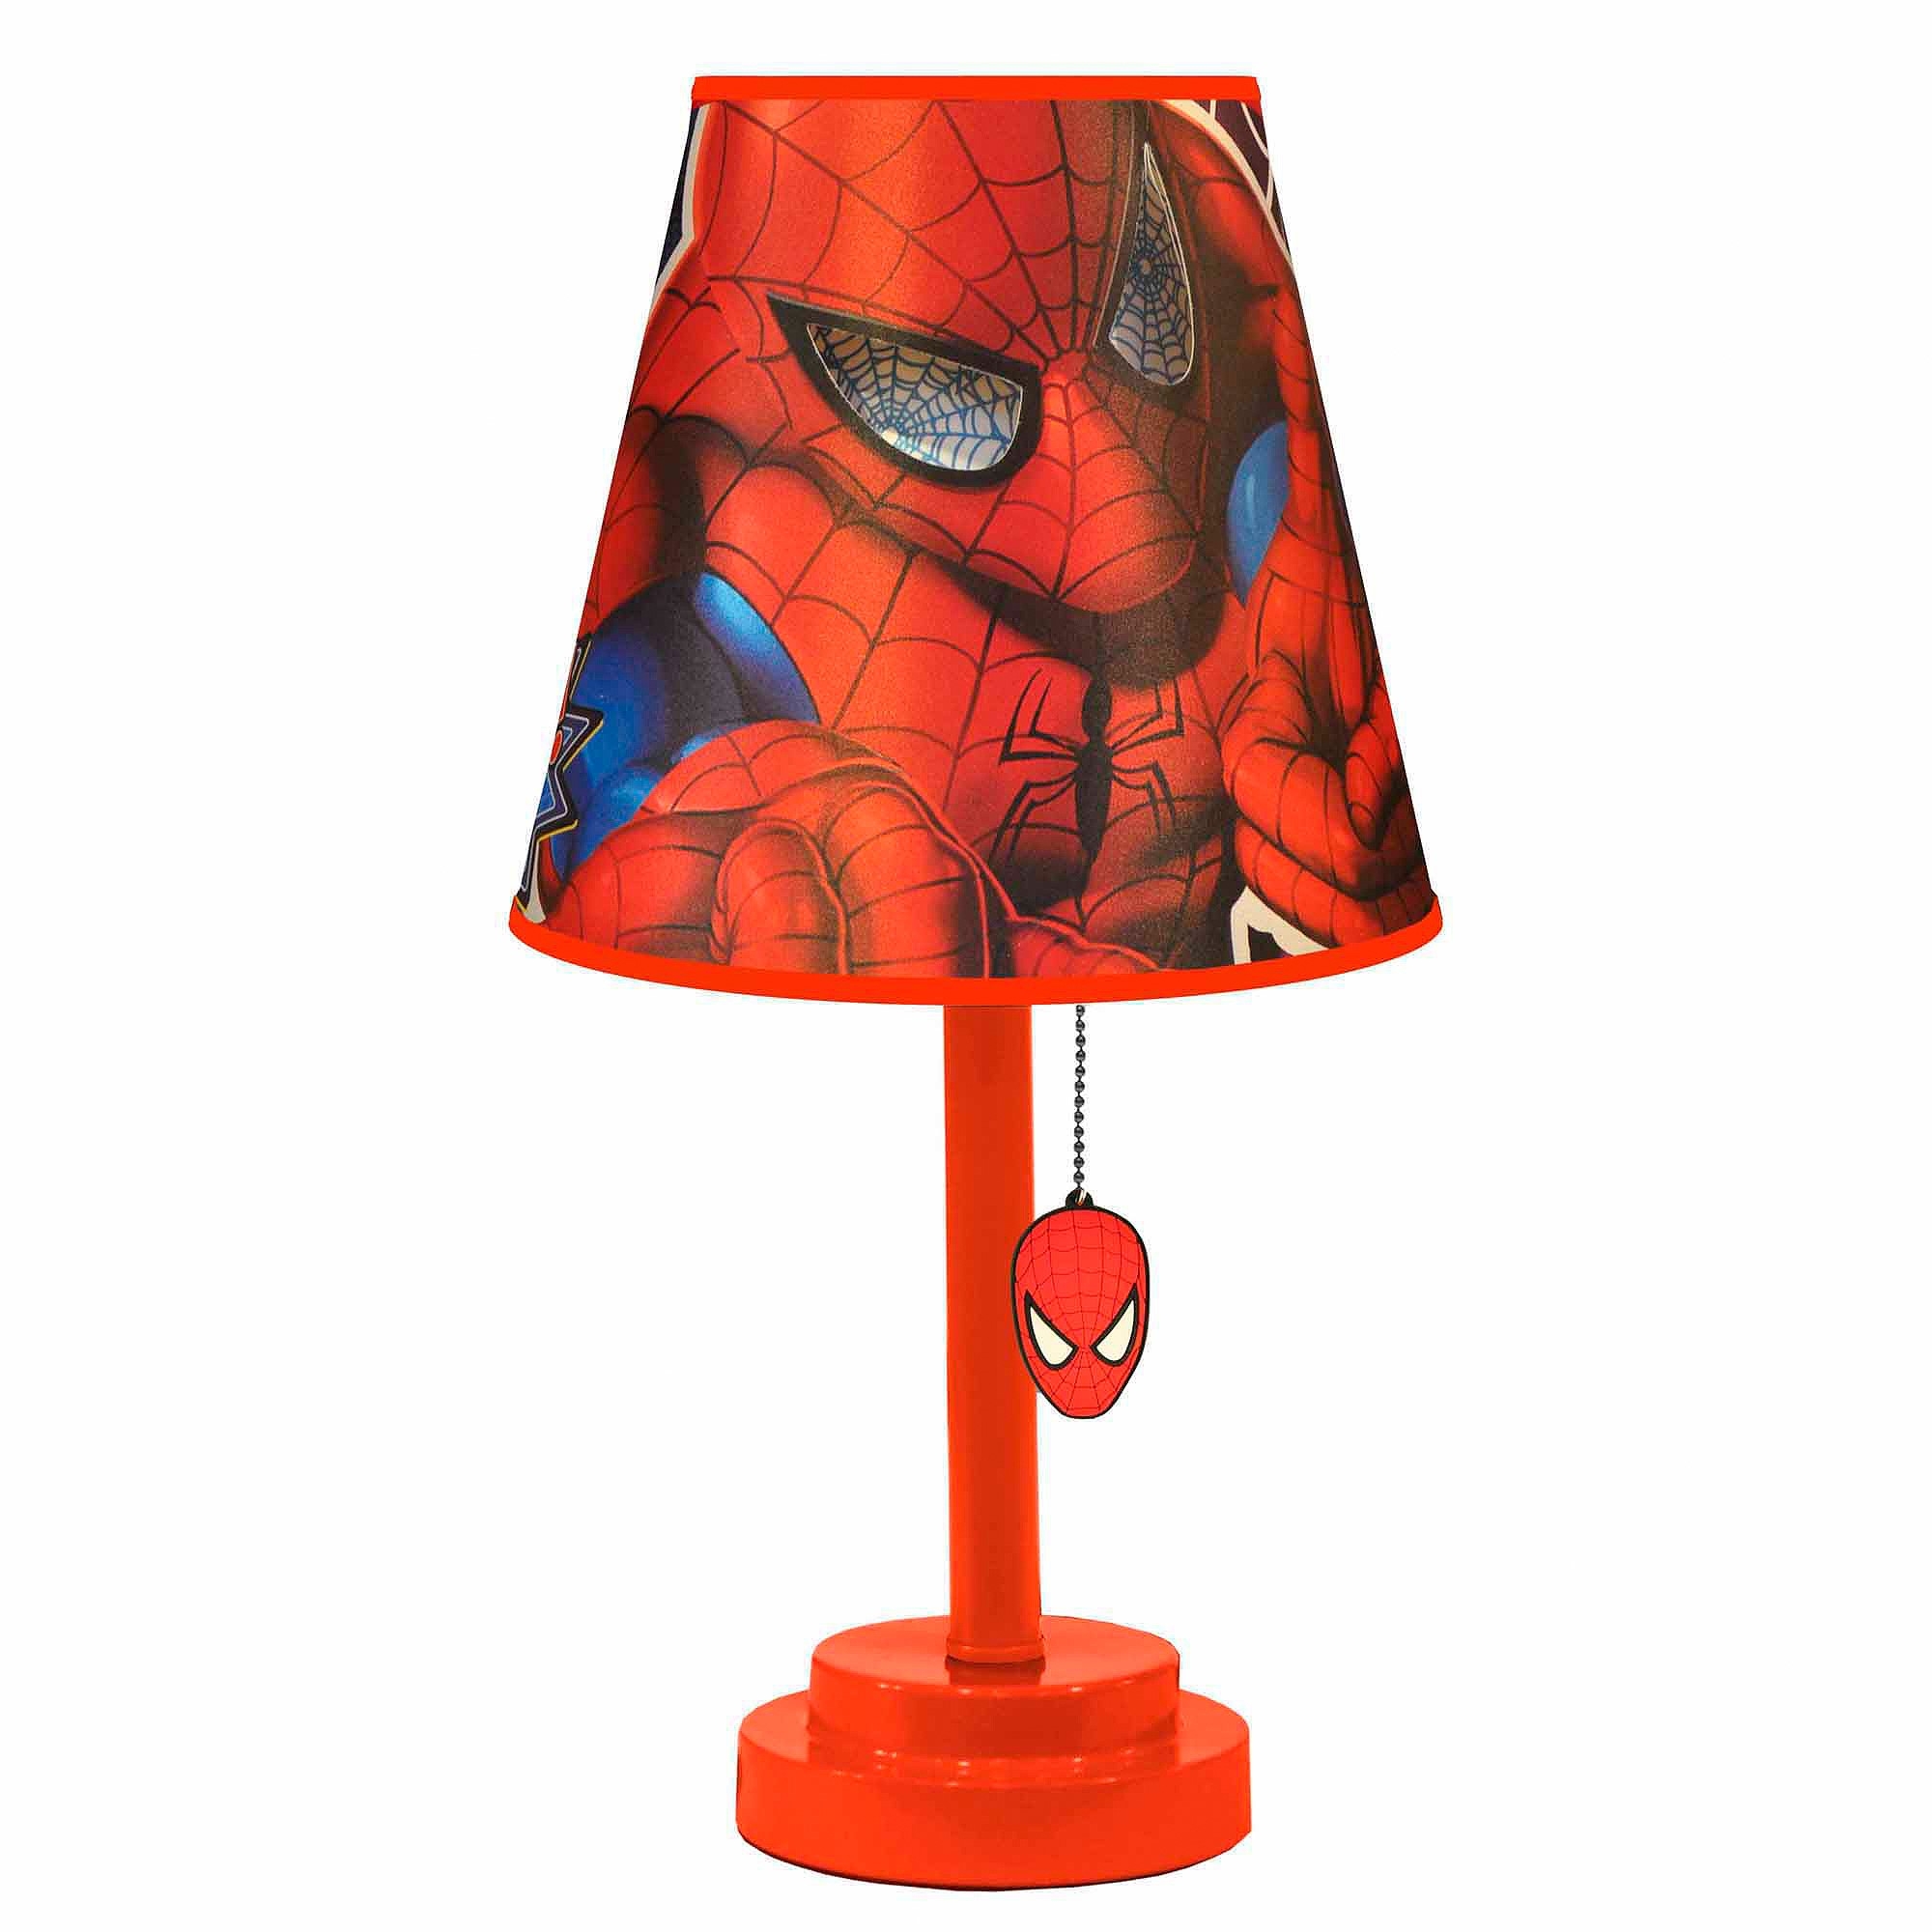 Spider man lamp 3